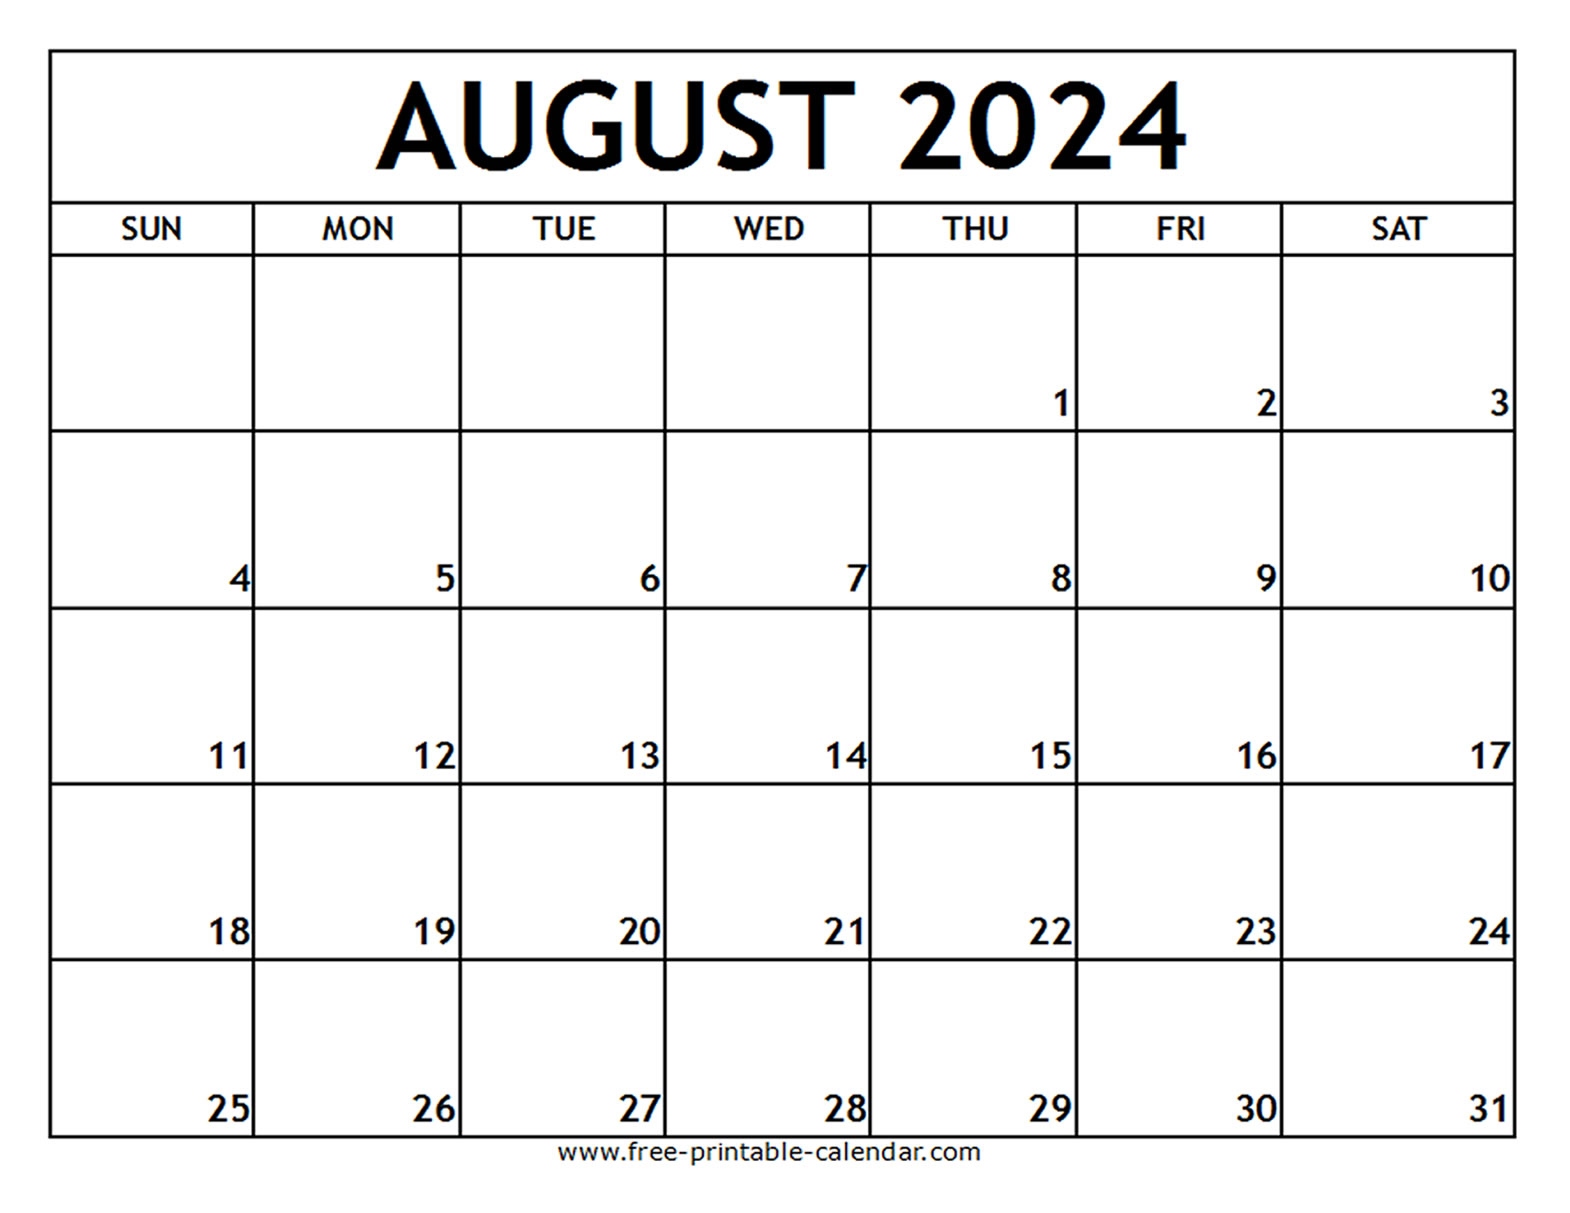 August 2024 Printable Calendar - Free-Printable-Calendar intended for Free Printable August 2024 Blank Calendar